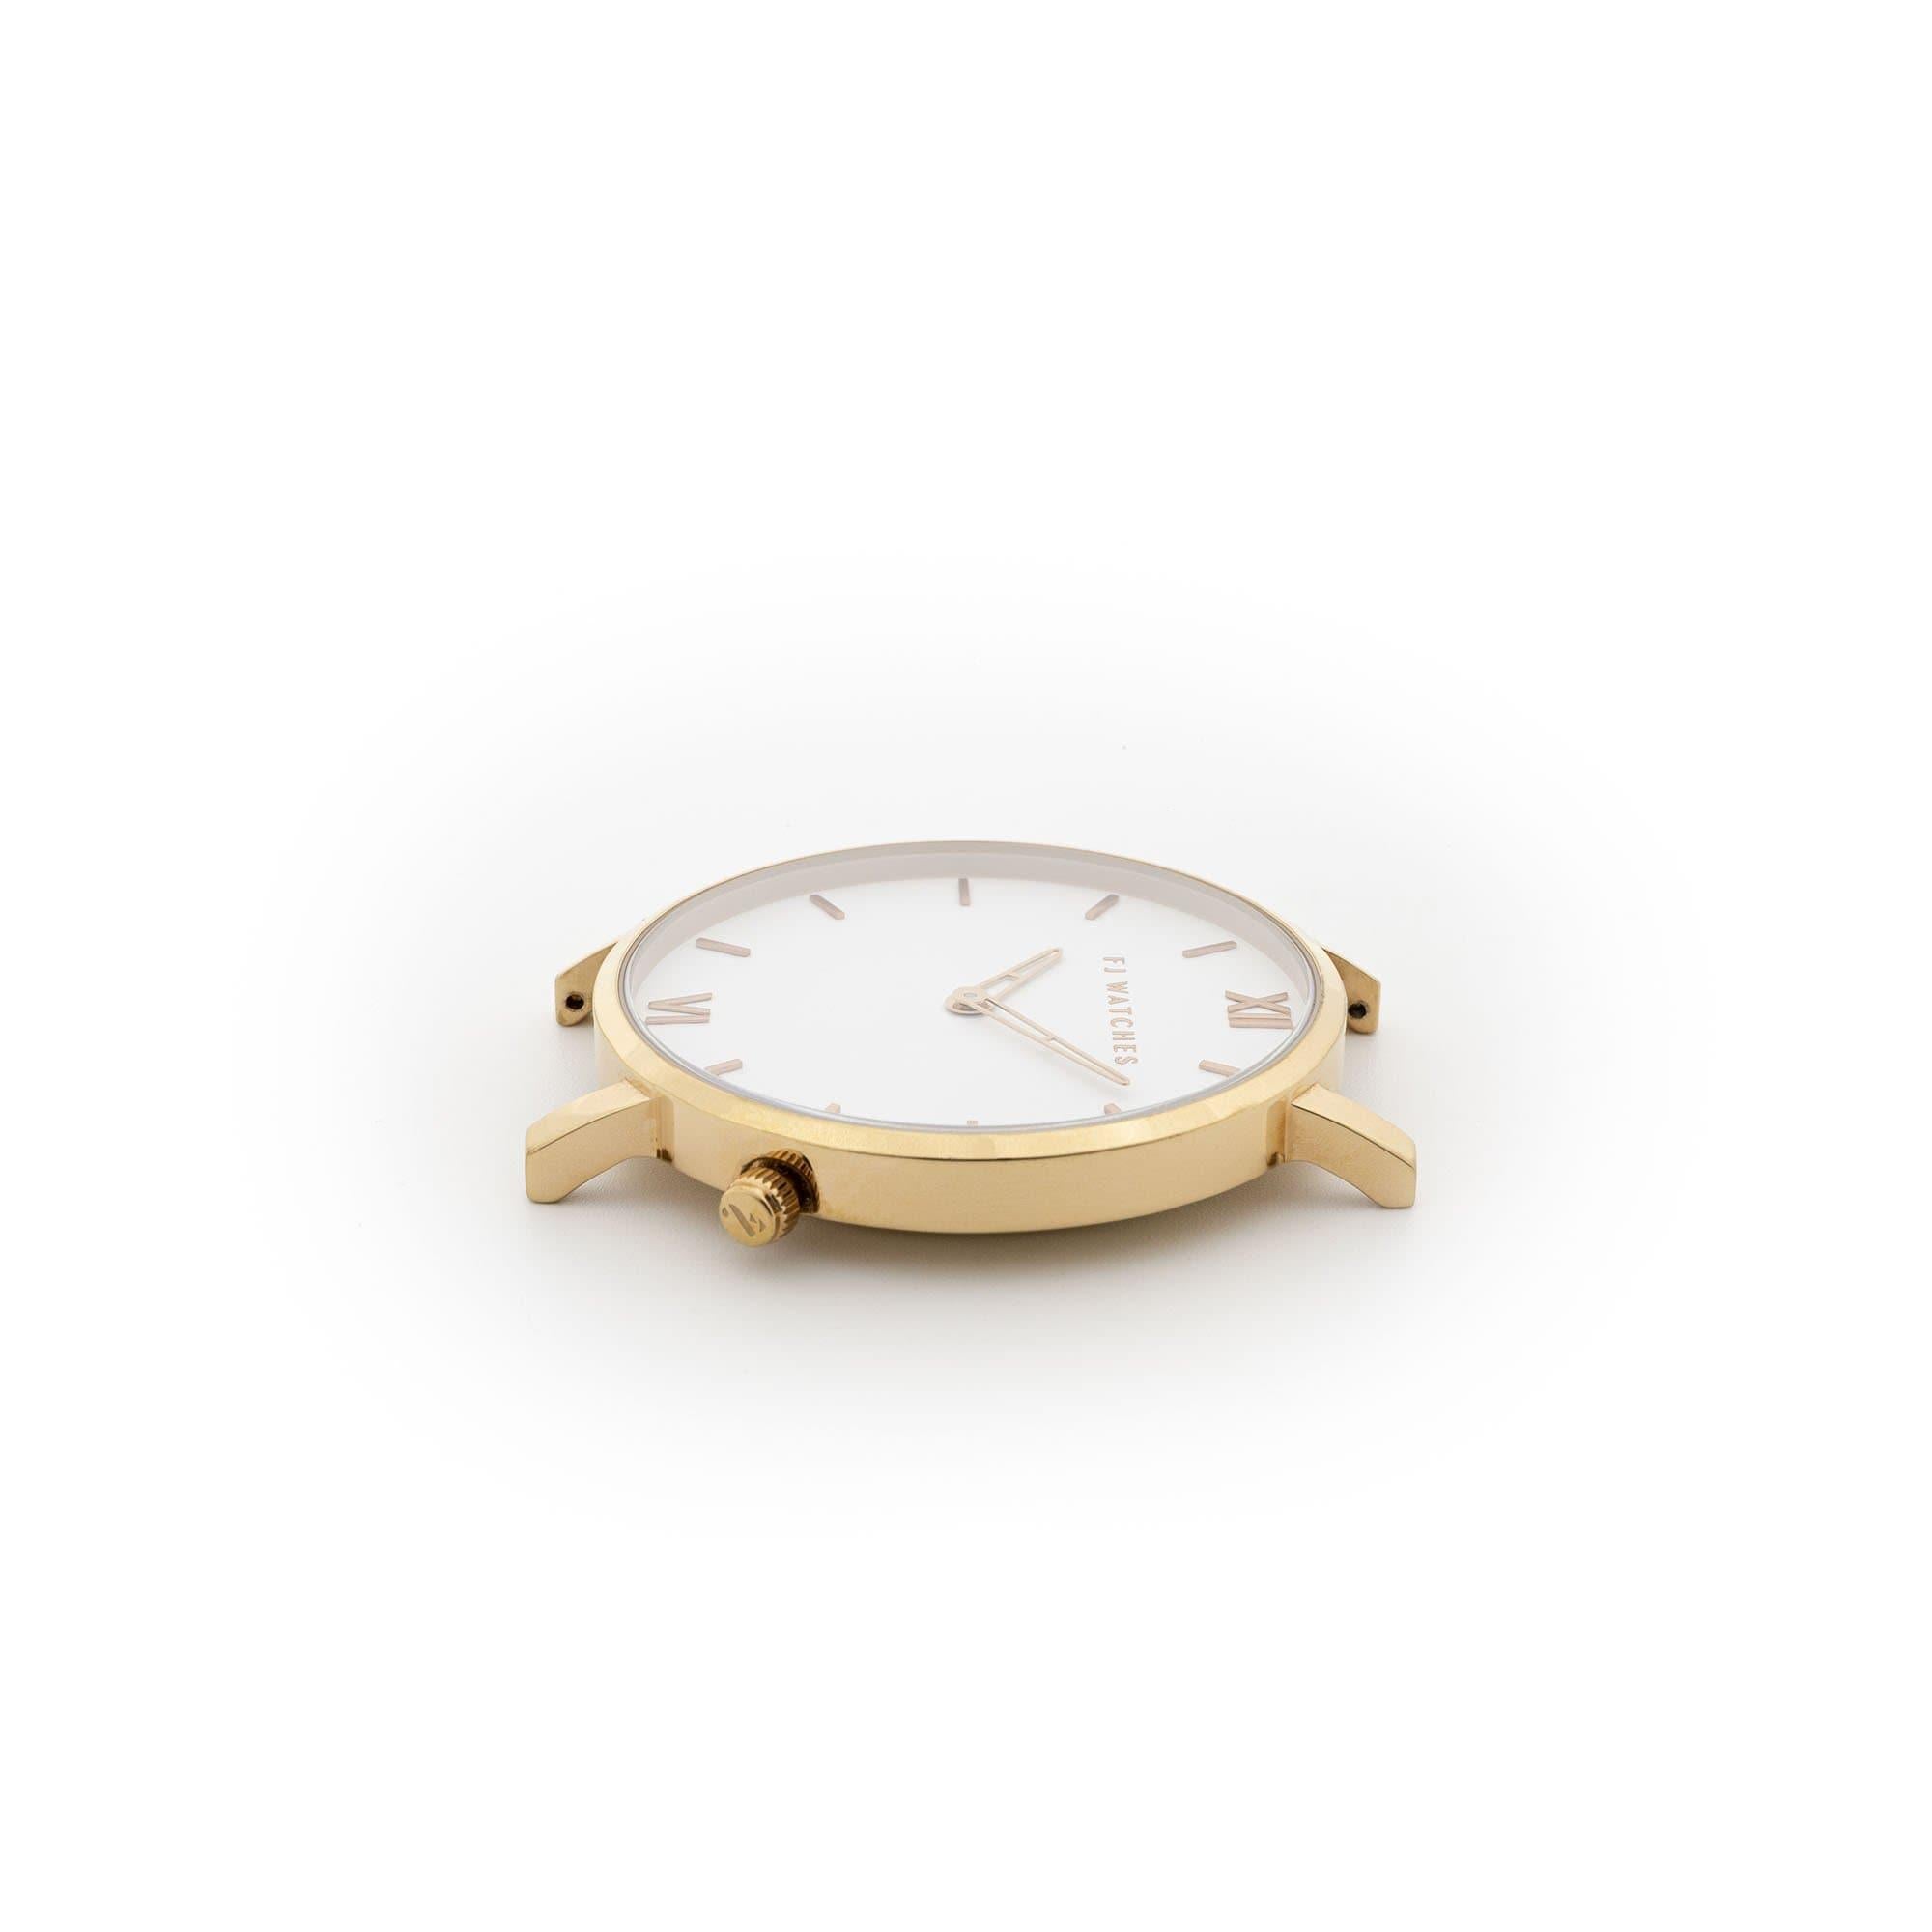 FJ Watches Golden sun white rose gold watch women 36mm minimalist dial